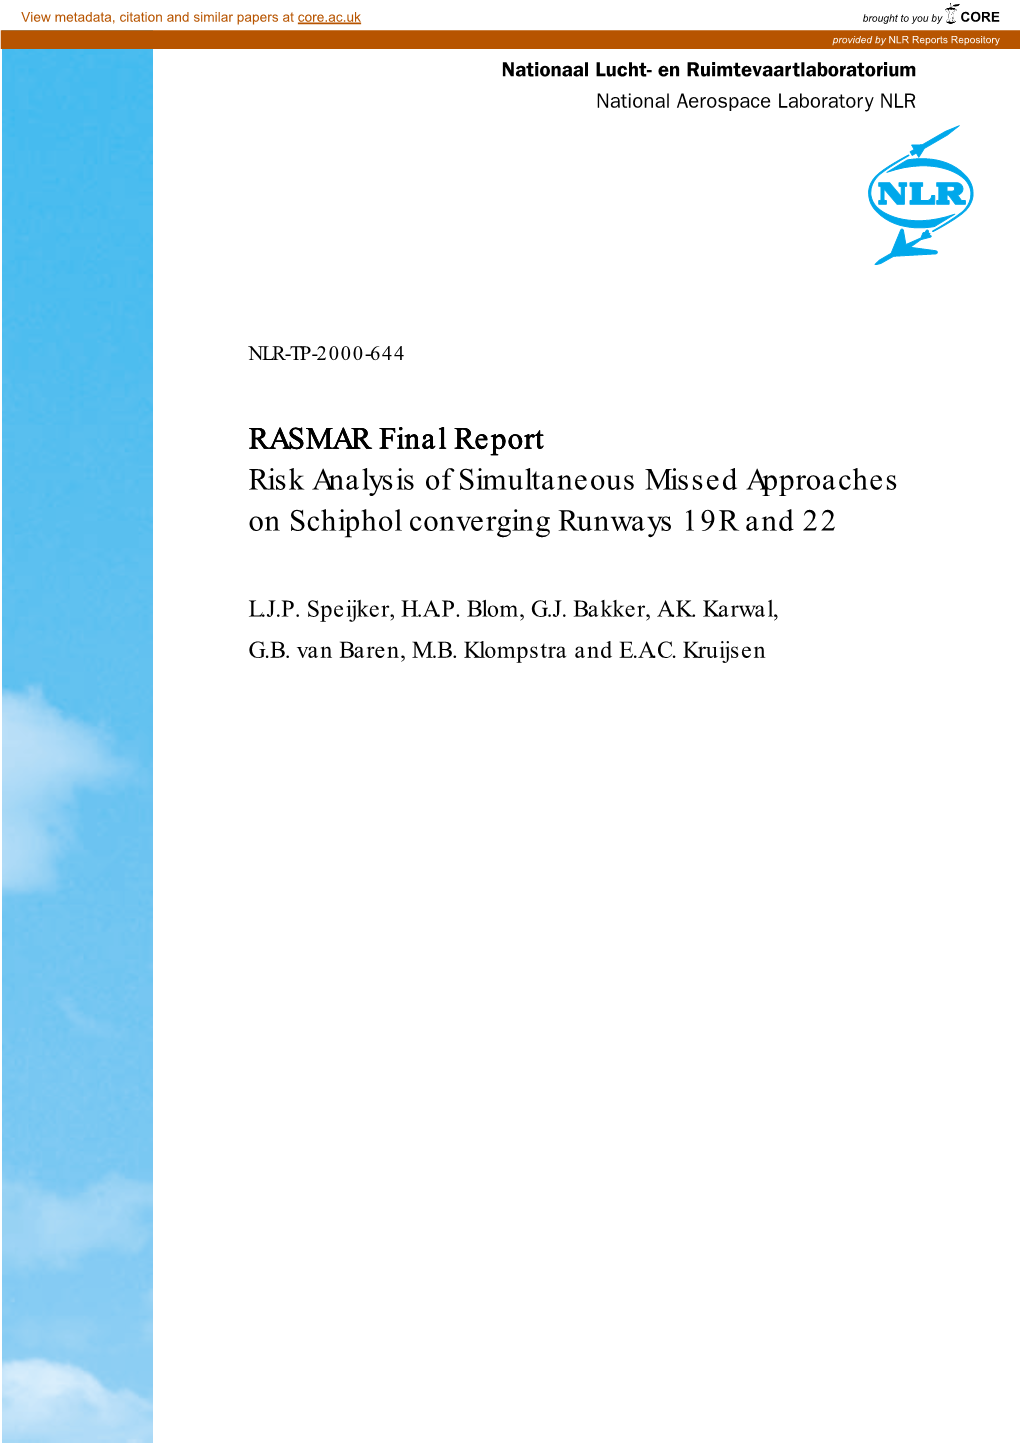 RASMAR Final Report Risk Analysis of Simultaneous Missed